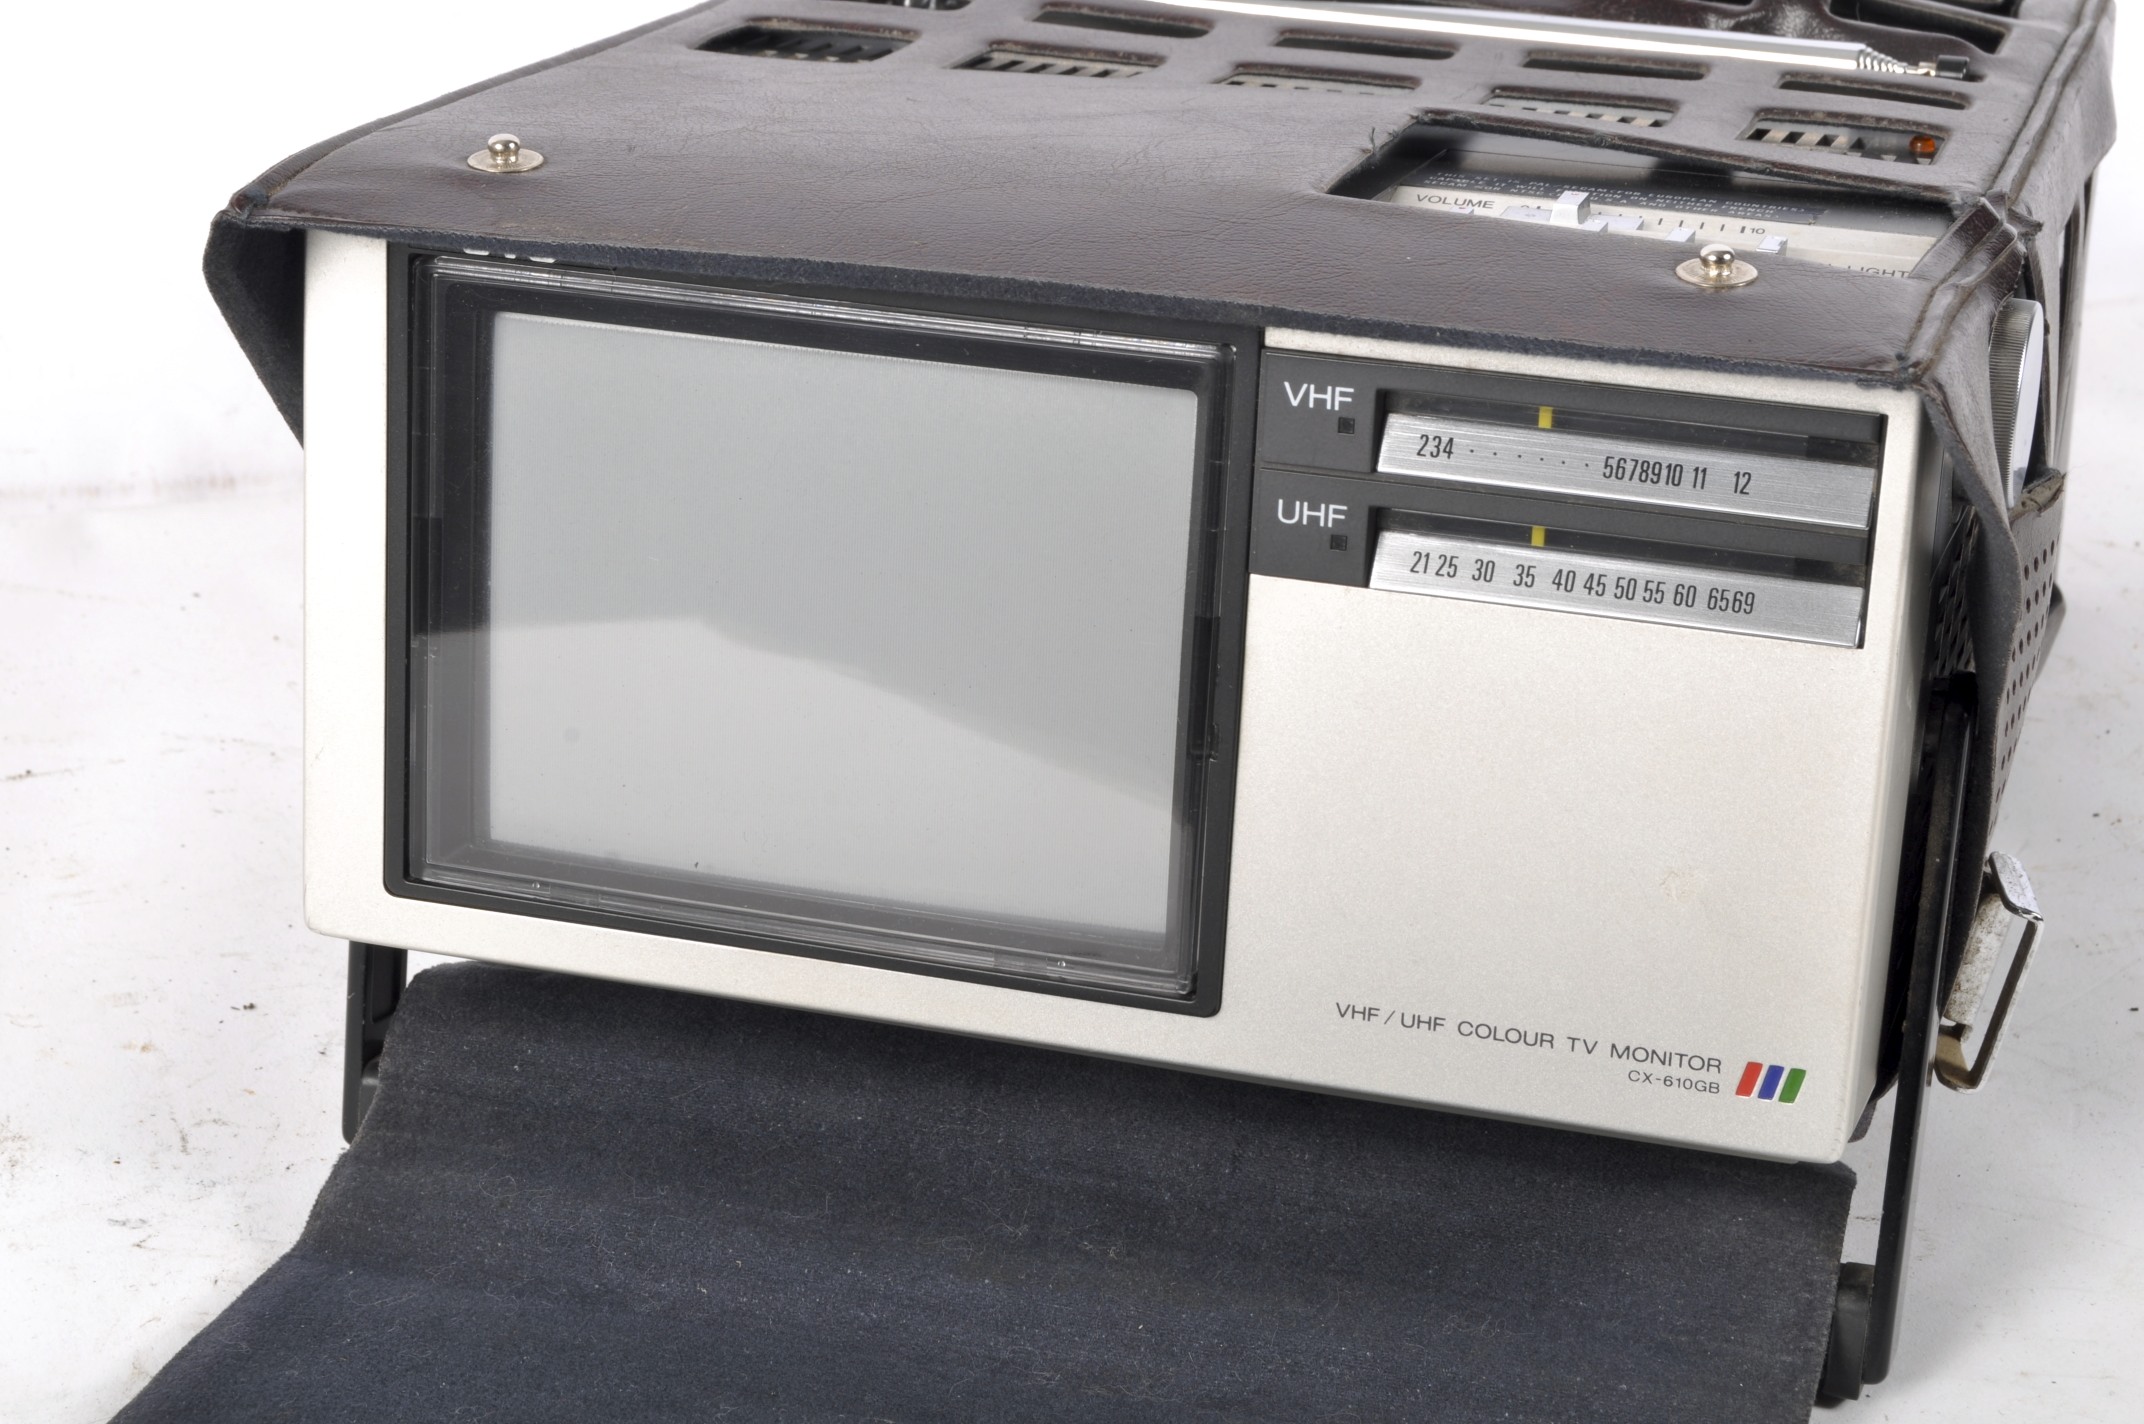 A TV Portable UHF VHF Colour TV Monitor, JVC CX-610GB, - Image 2 of 4